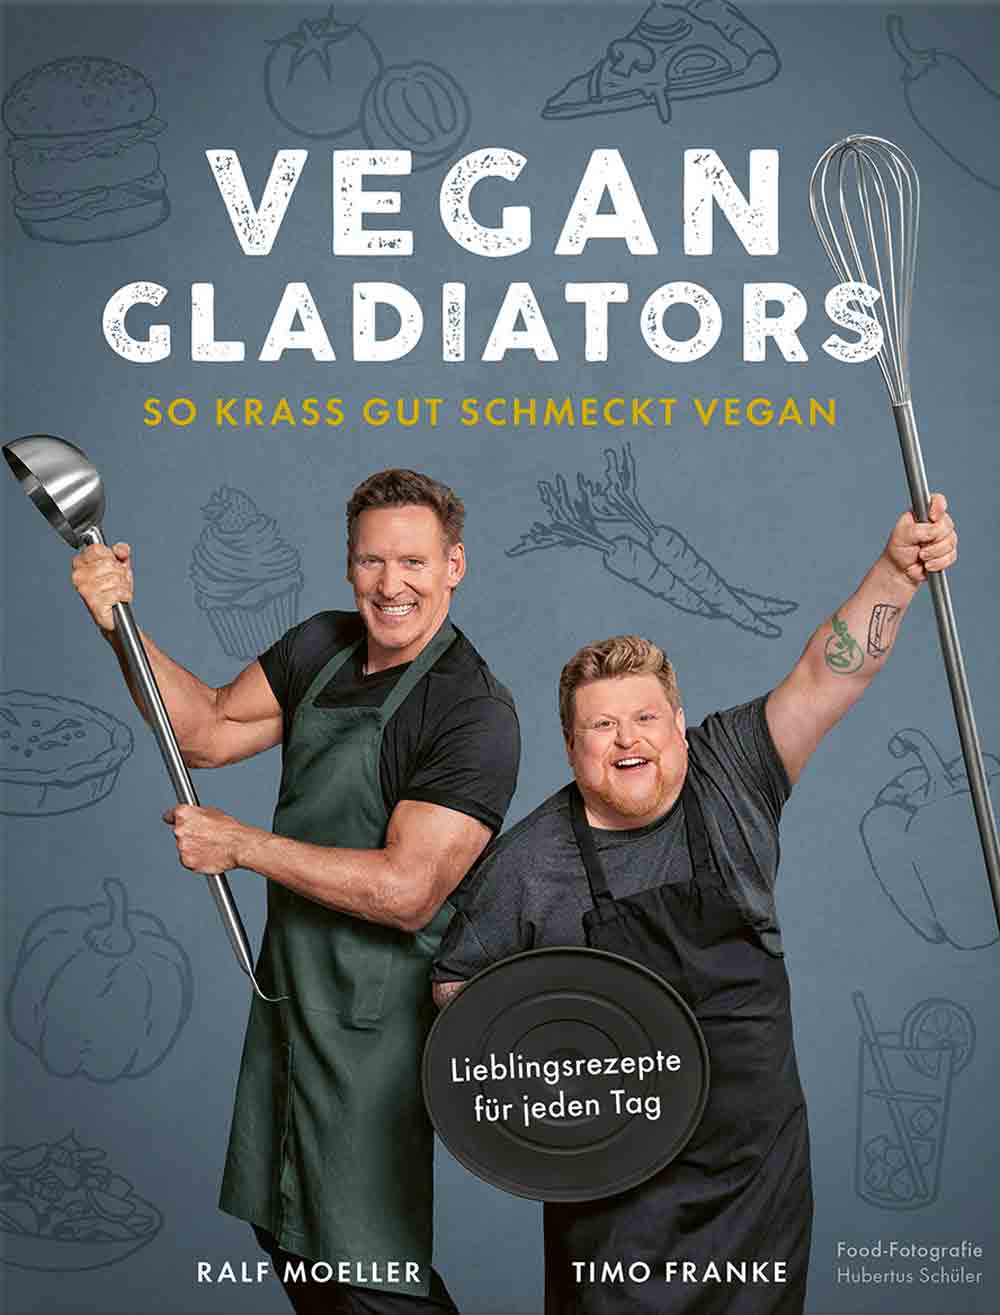 Lesetipps für Gütersloh, Vegan Gladiators, so krass gut schmeckt vegan, Ralf Moeller isst vegan? Echt jetzt?